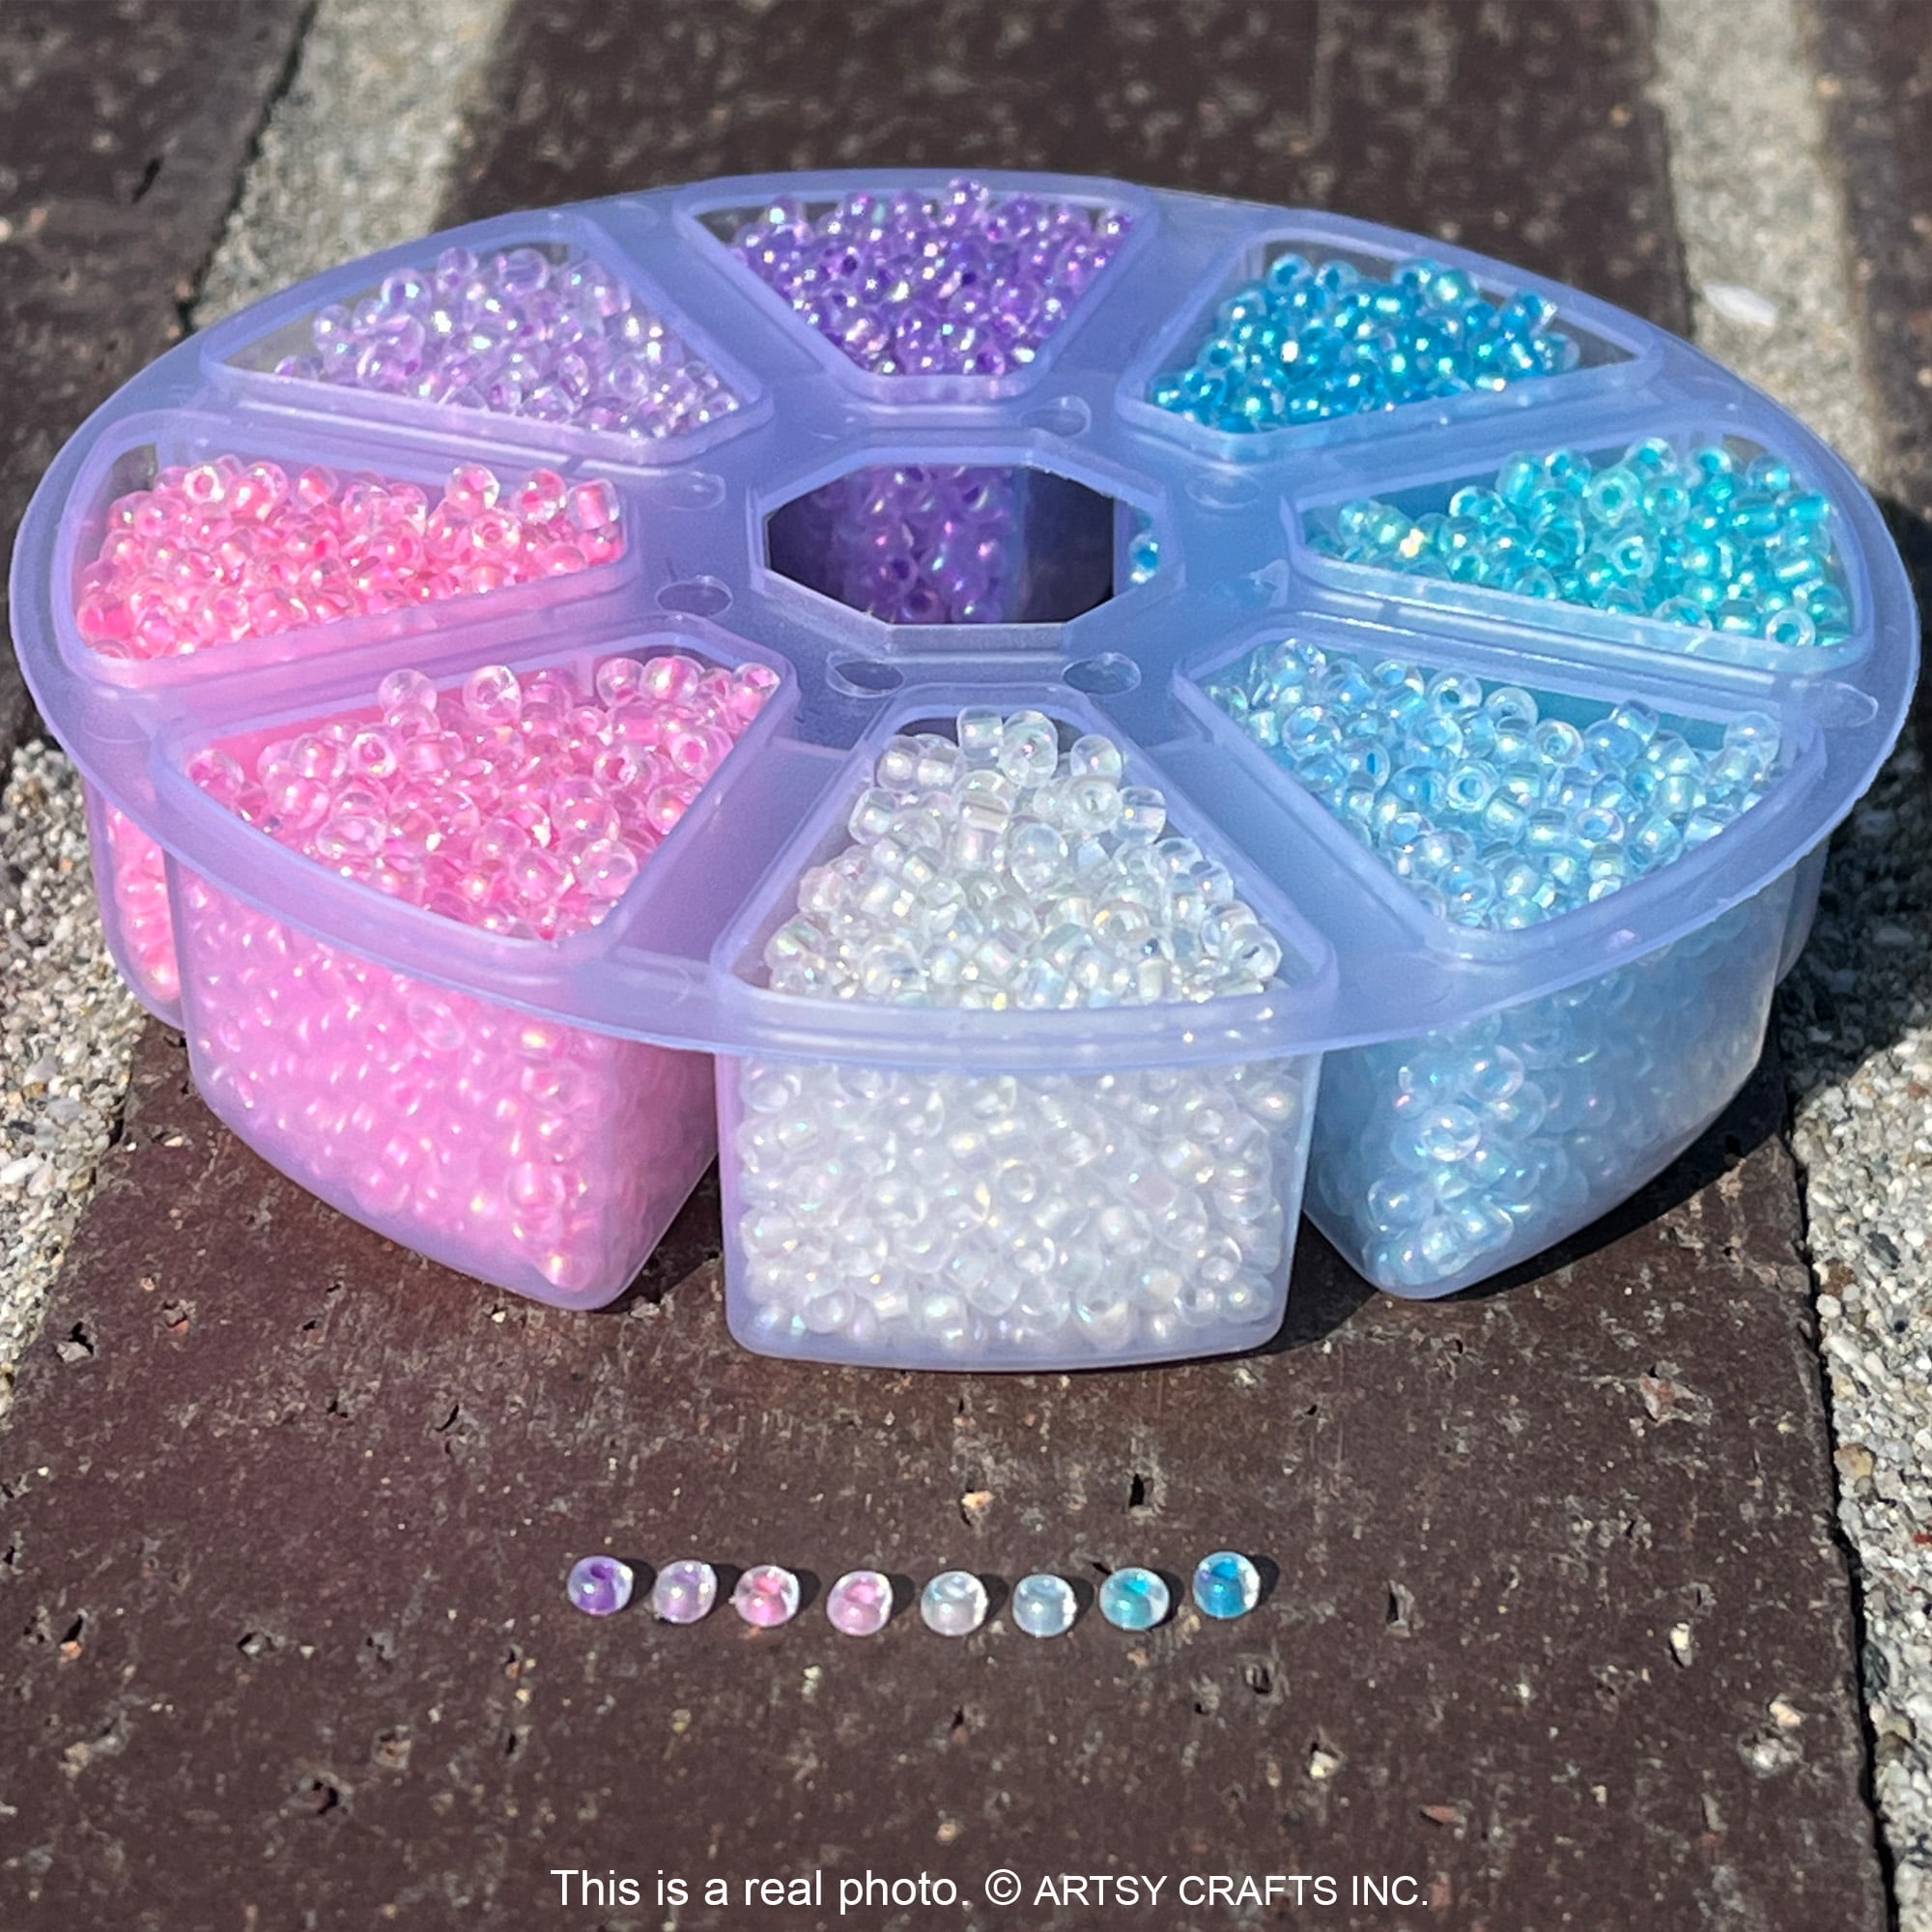  Ferreve 4000 Pcs Glass Seed Beads 4mm Glow in The Dark